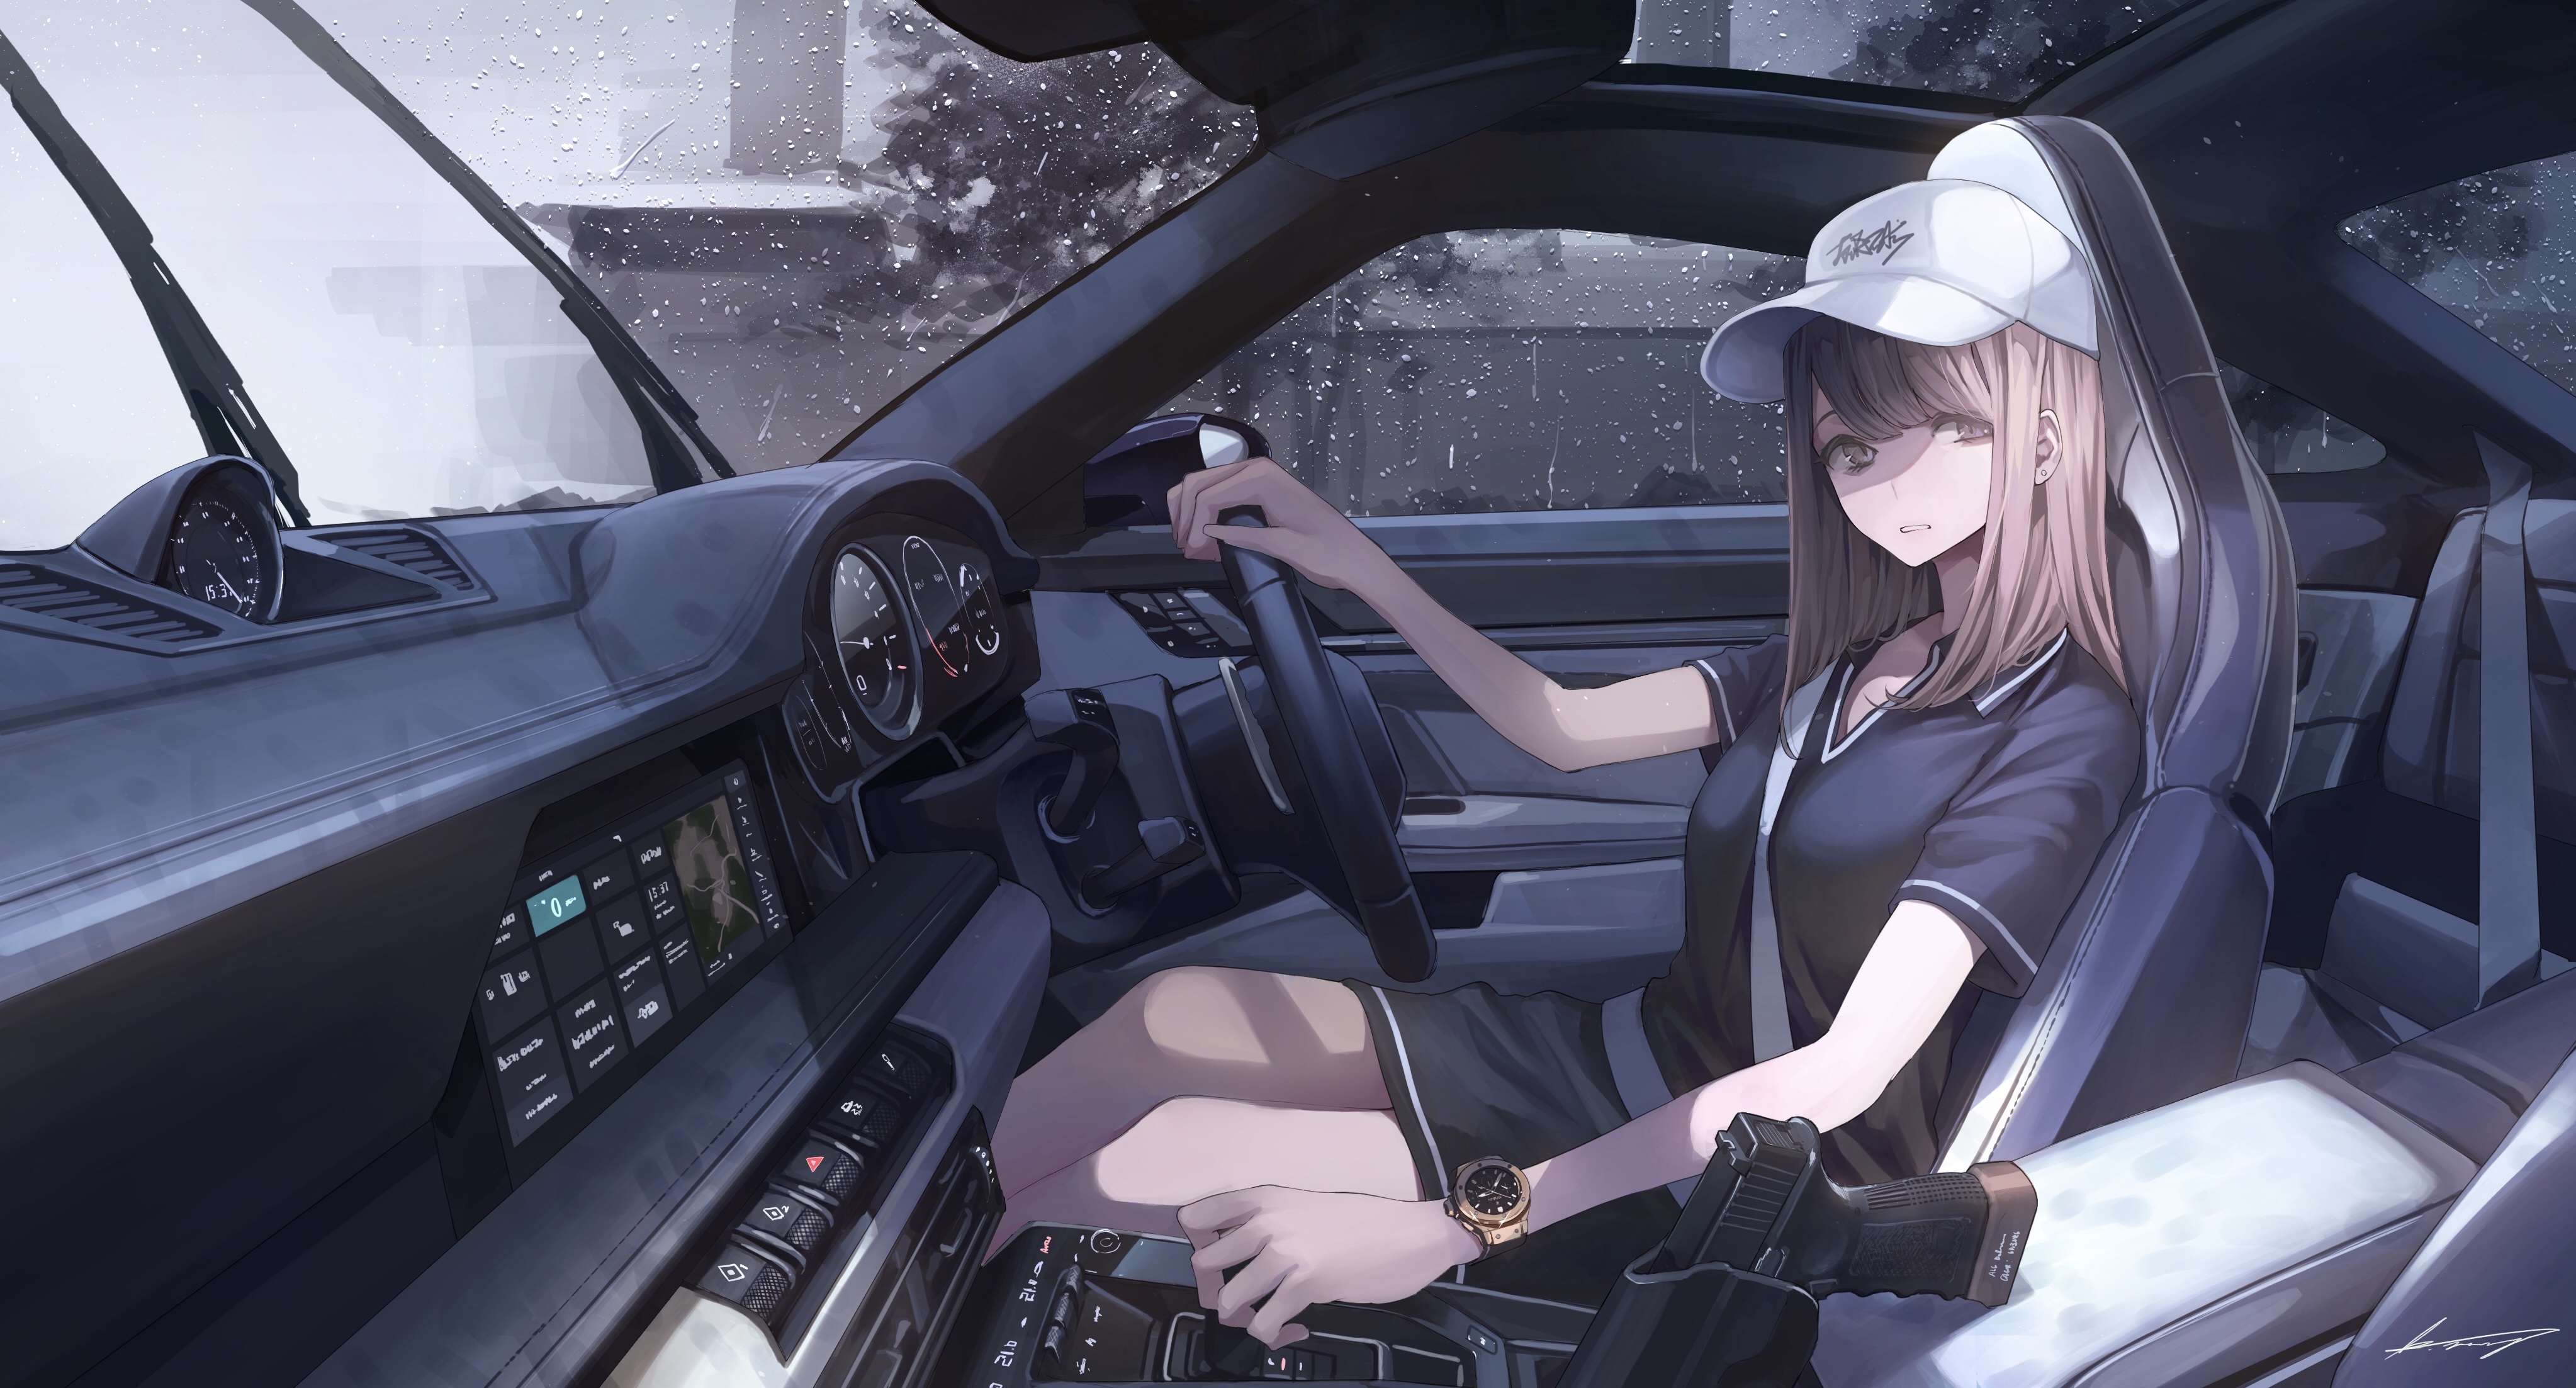 Anime 4093x2205 anime anime girls digital art artwork 2D portrait koh car interior gun brunette brown eyes baseball cap dress Porsche Porsche 911 driving